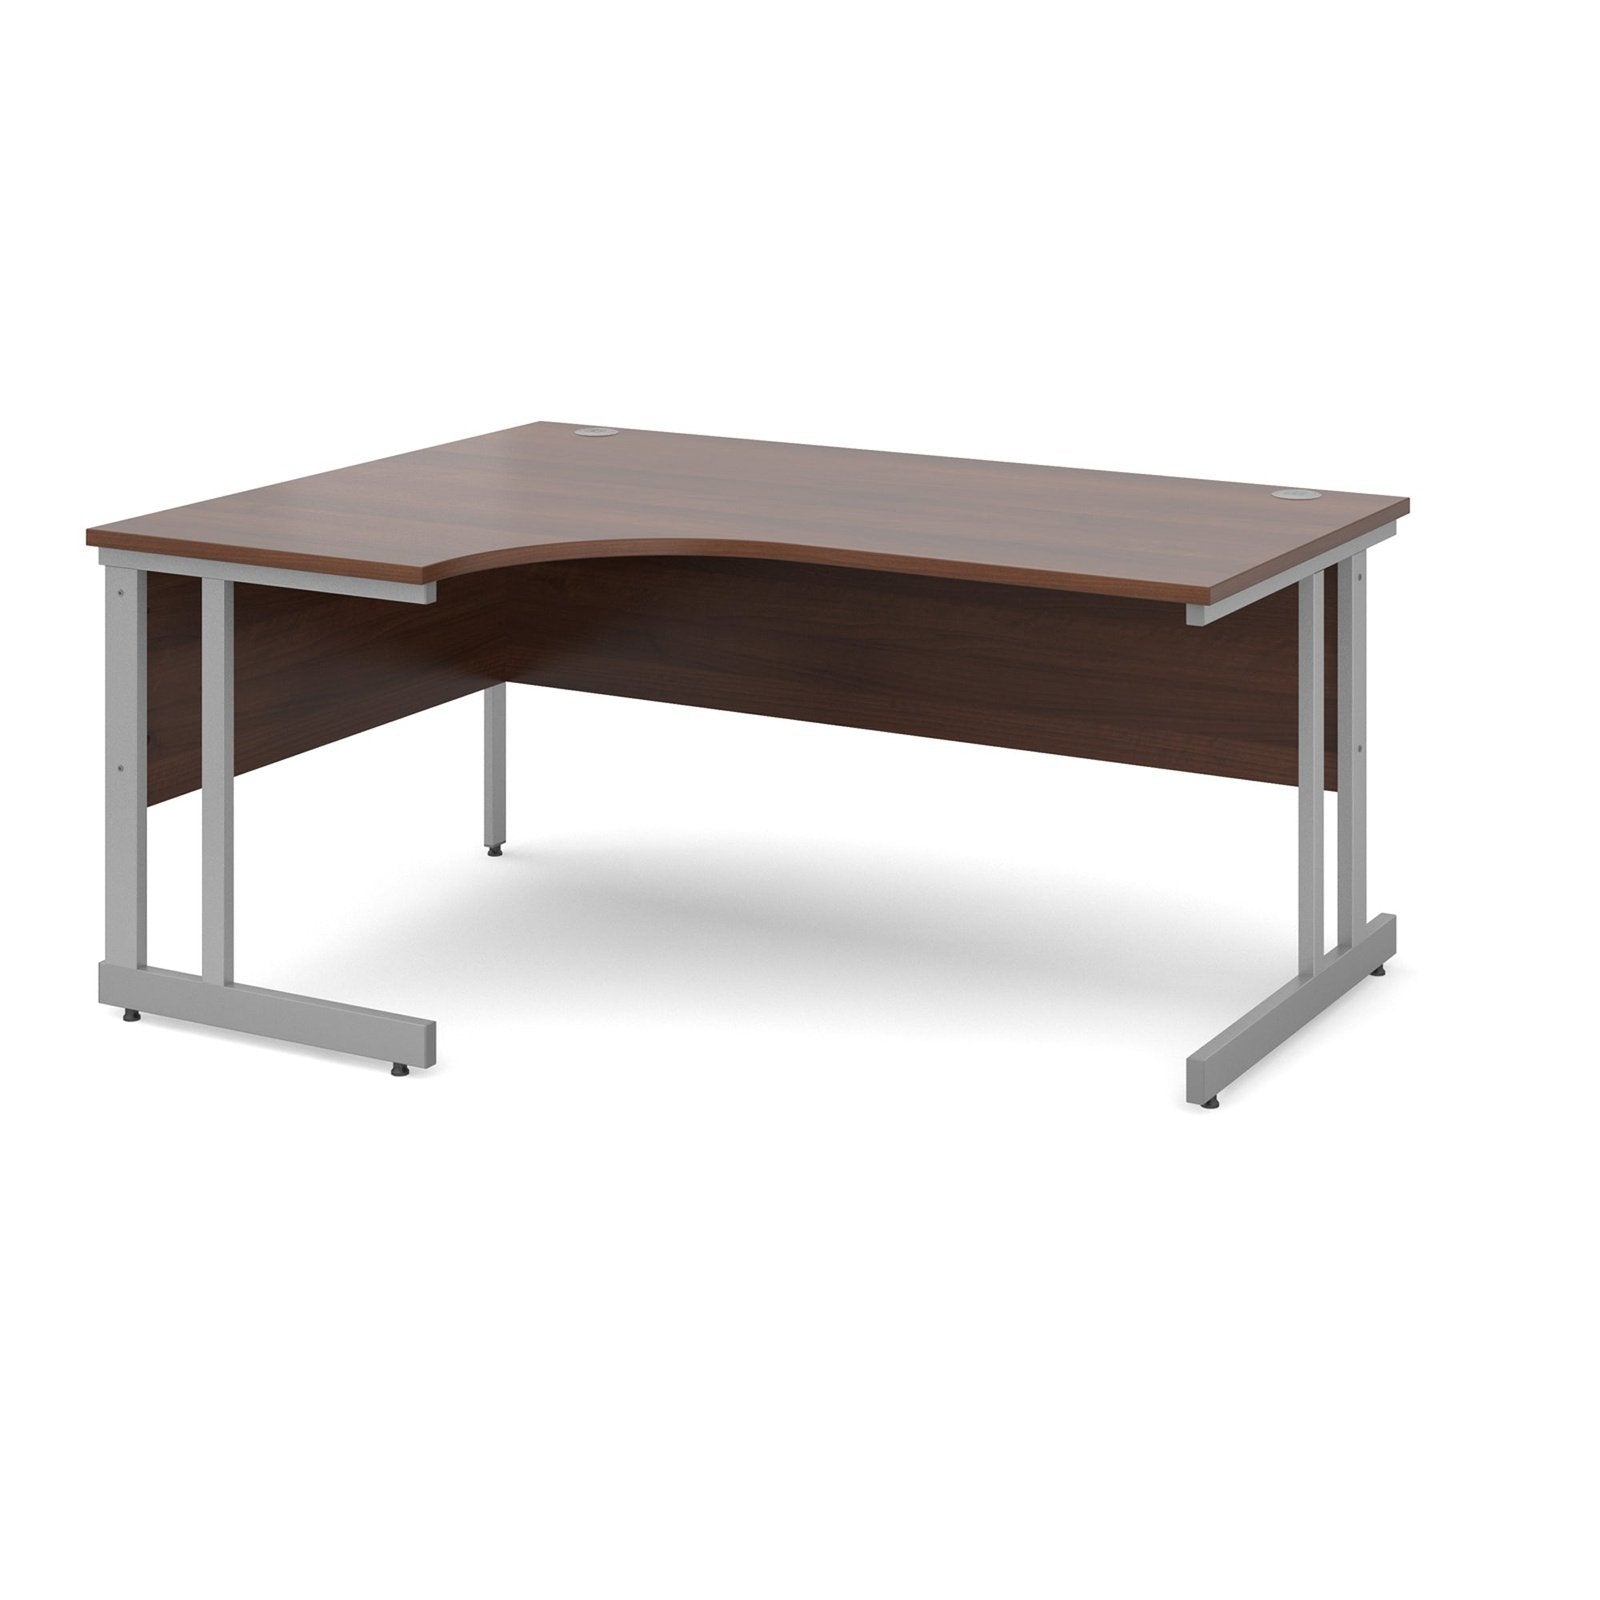 Momento cantilever leg left hand ergonomic desk - Office Products Online